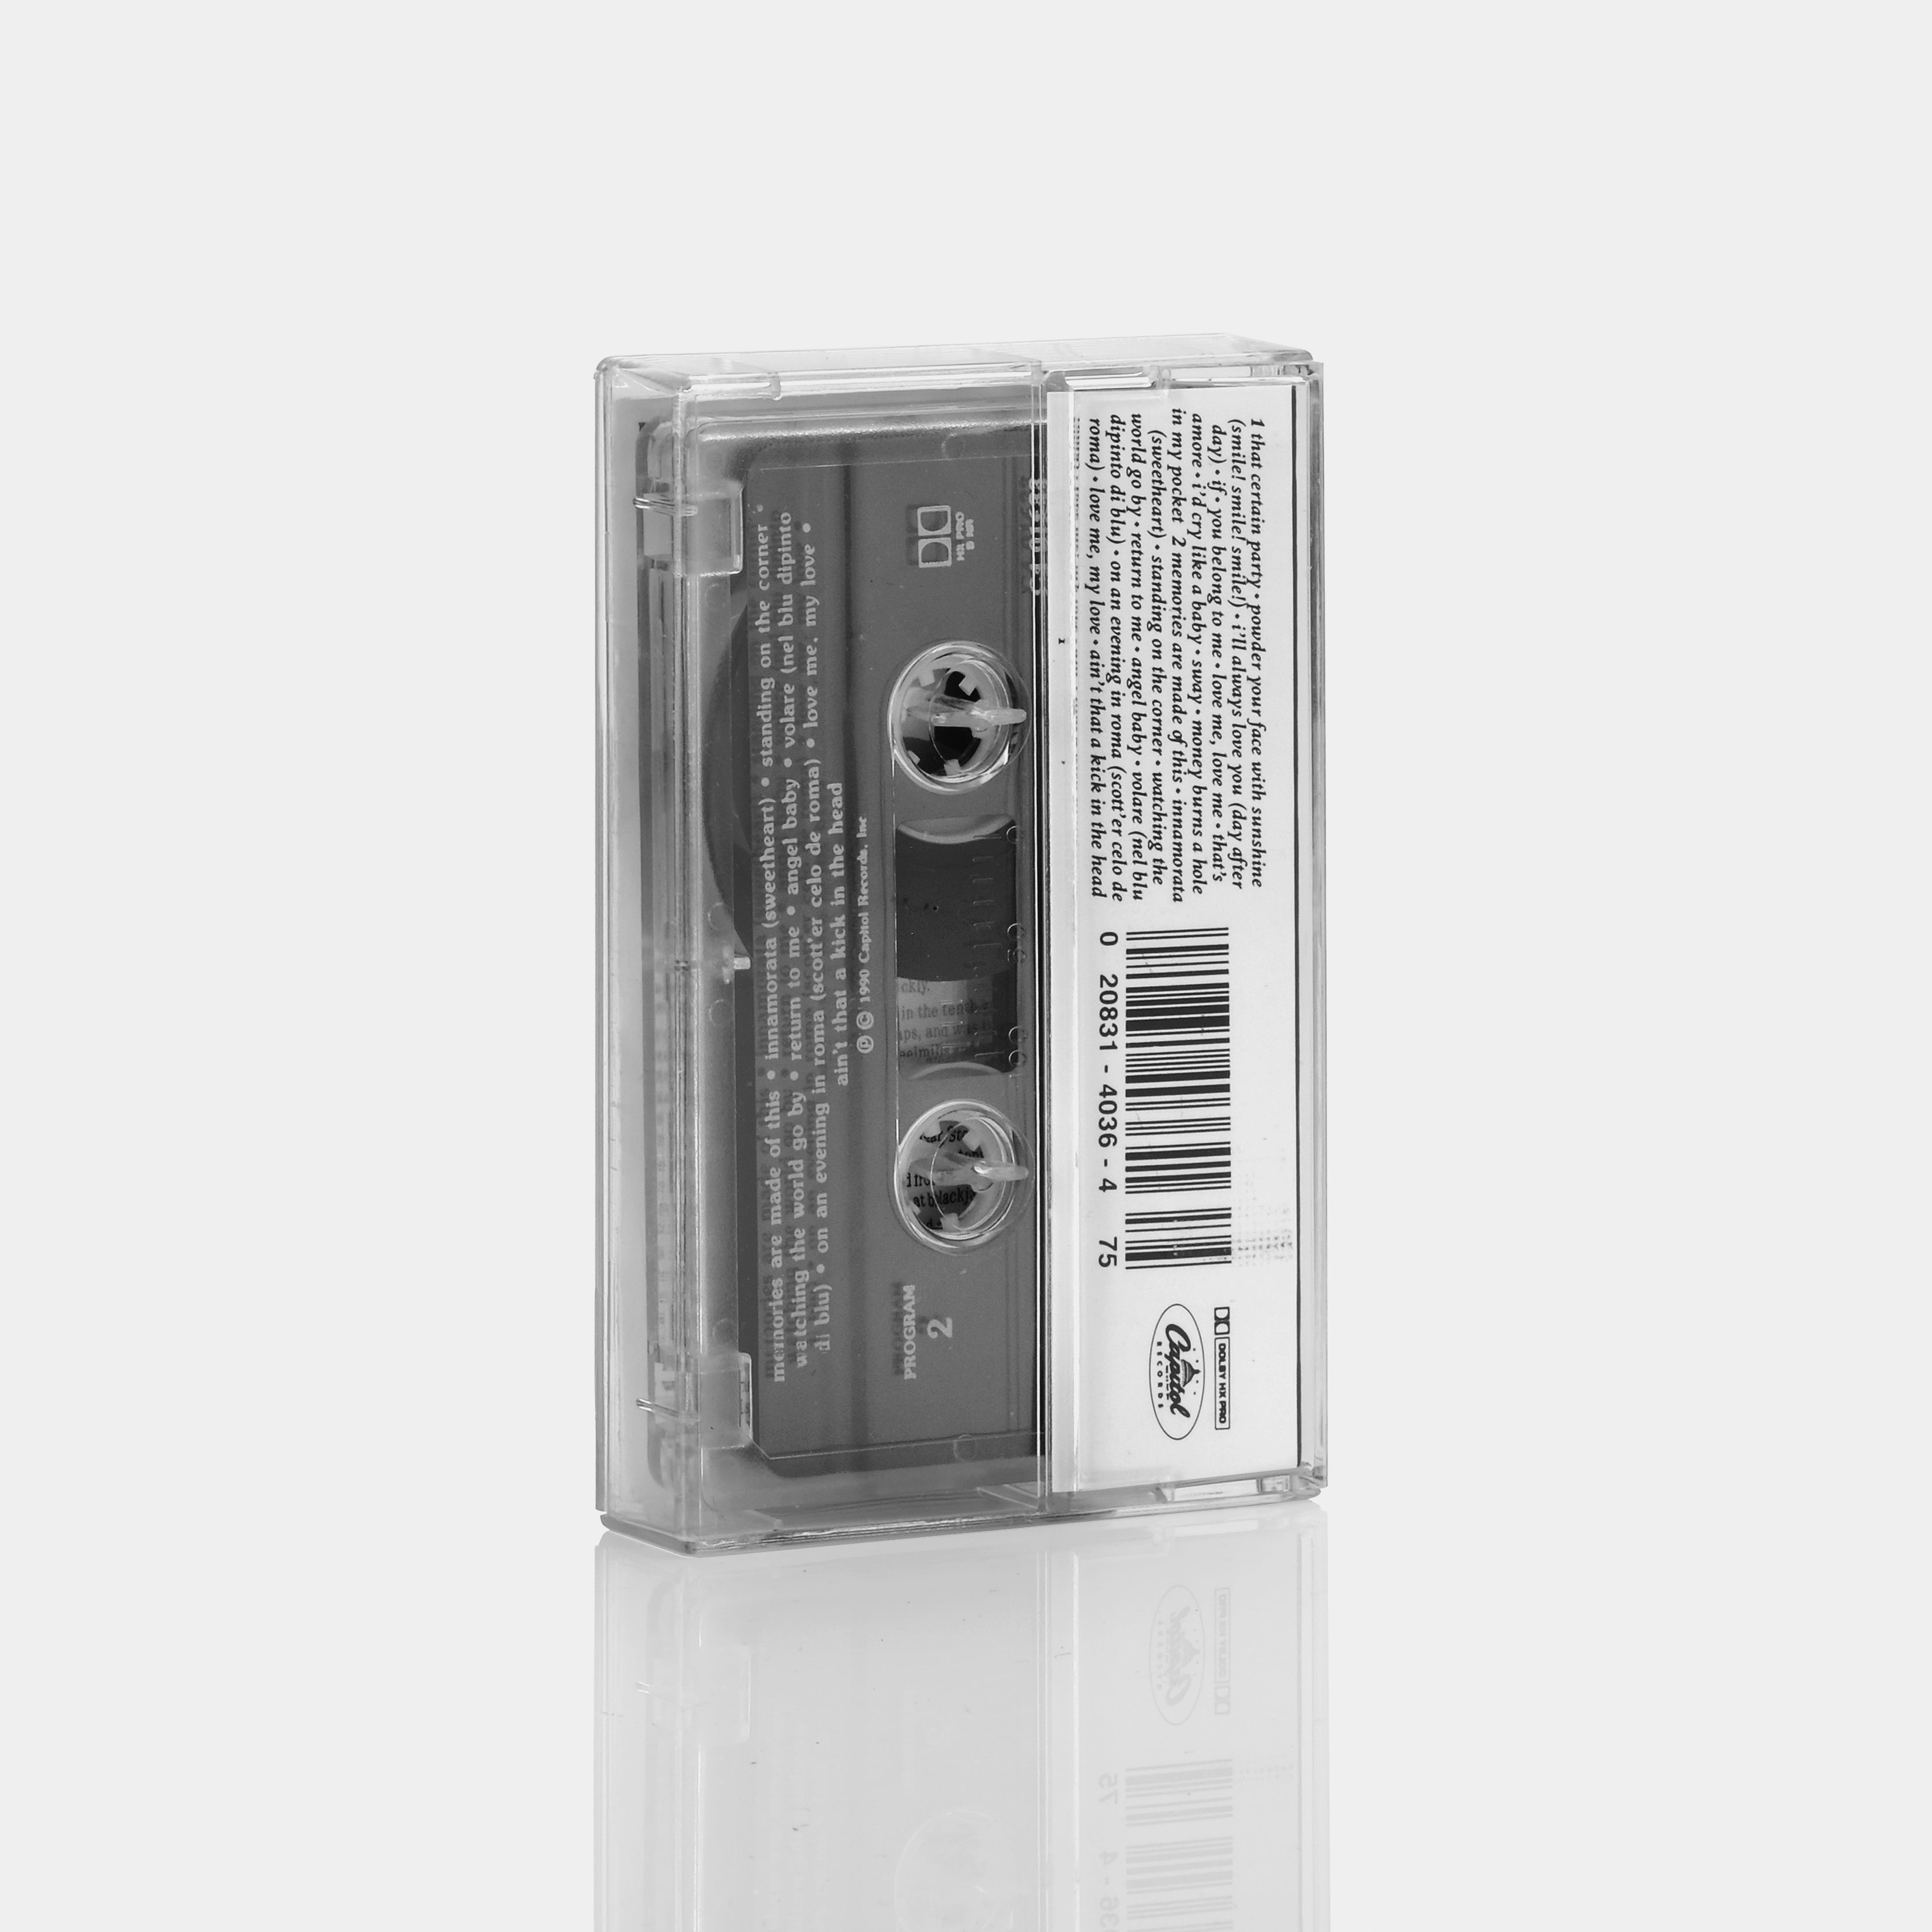 Dean Martin - The Capitol Collectors Series Cassette Tape